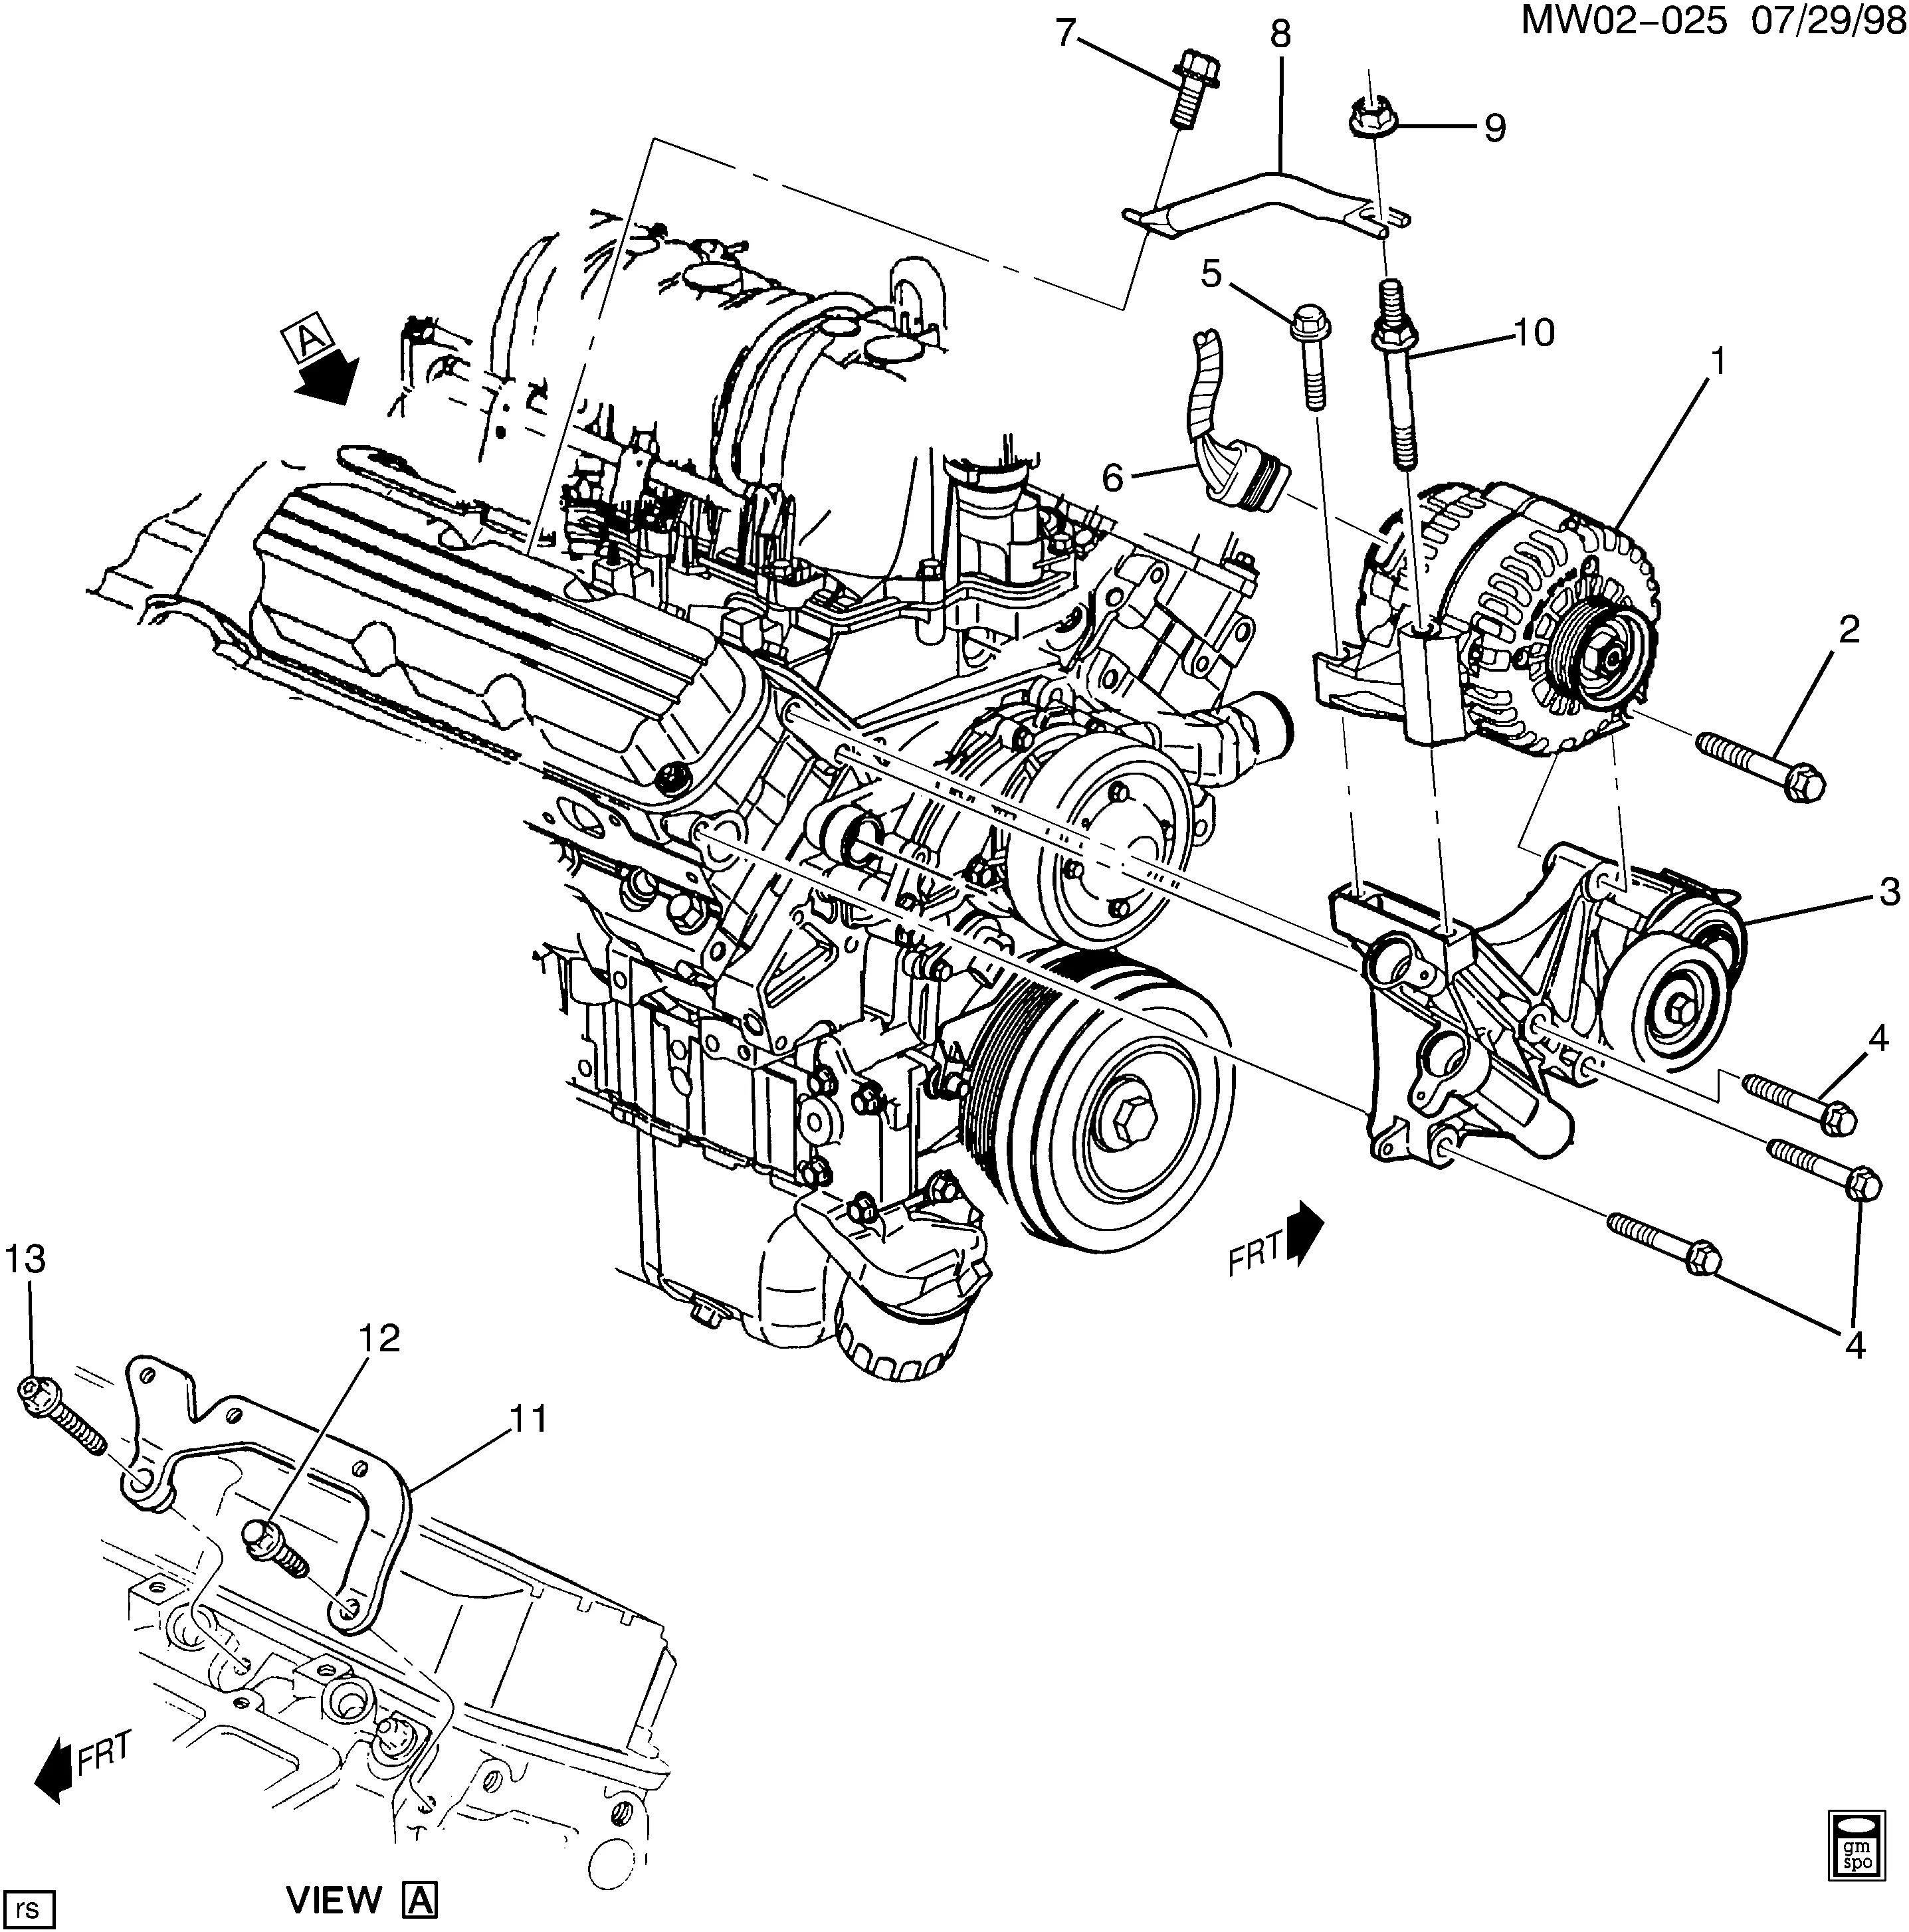 36 3 8. Buick l36 ДВС. Двигатель l36 3.8 схемы. Генератор Pontiac Bonneville l37. Pontiac Bonneville 1988 3,8 ремень генератора артикул.